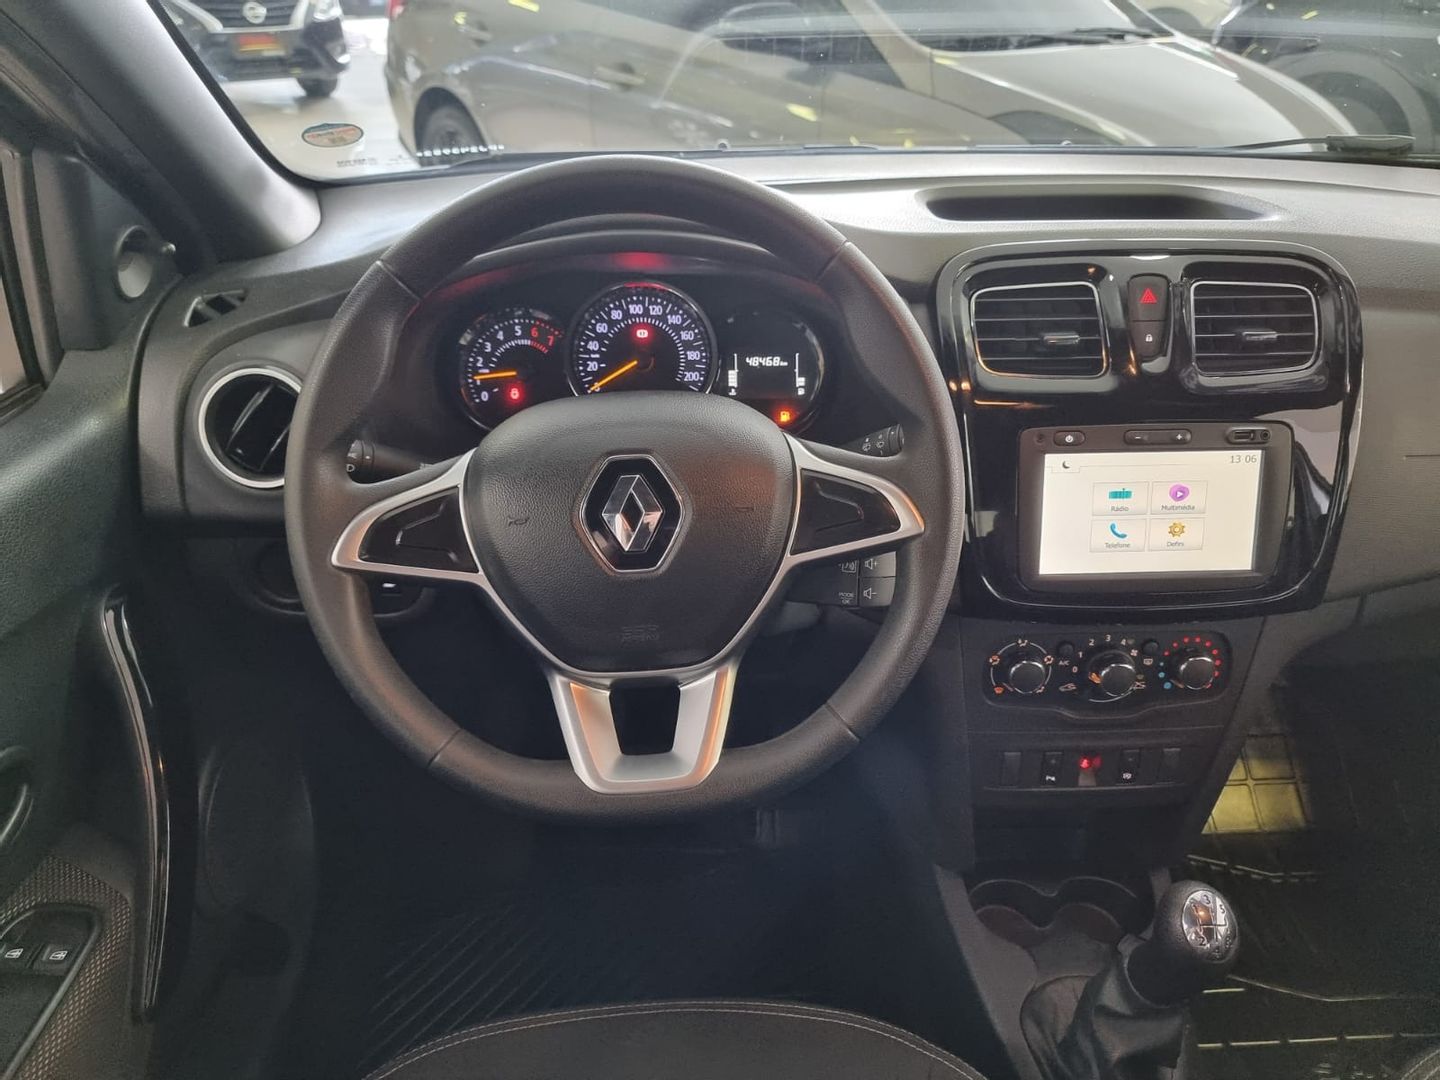 Renault SANDERO S Edition Flex 1.0 12V 5p Mec.